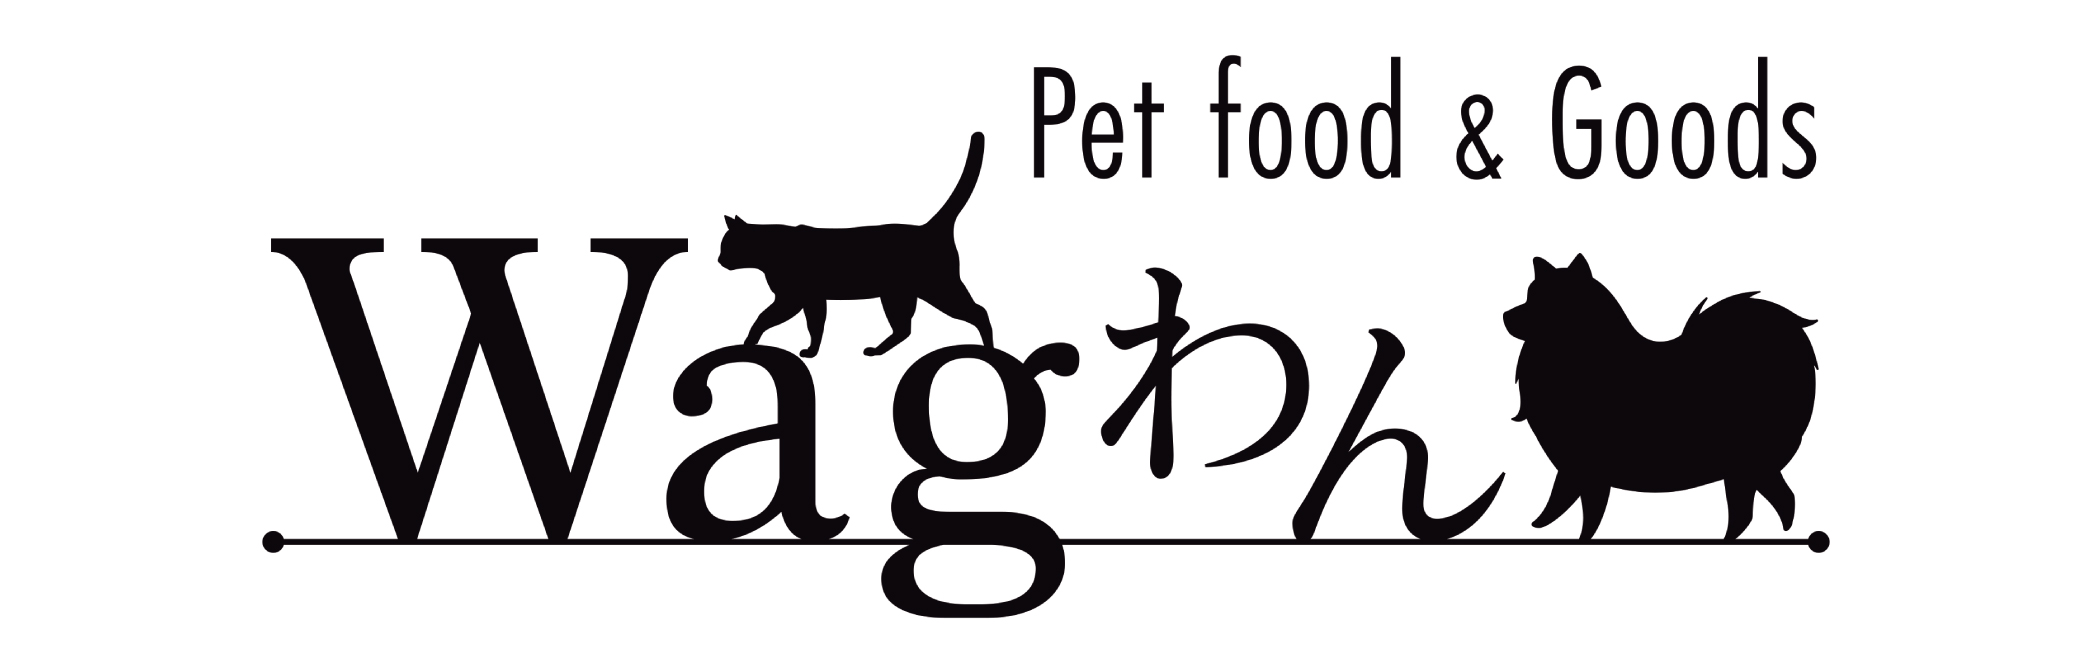 Wagわん - Pet food & Goods-